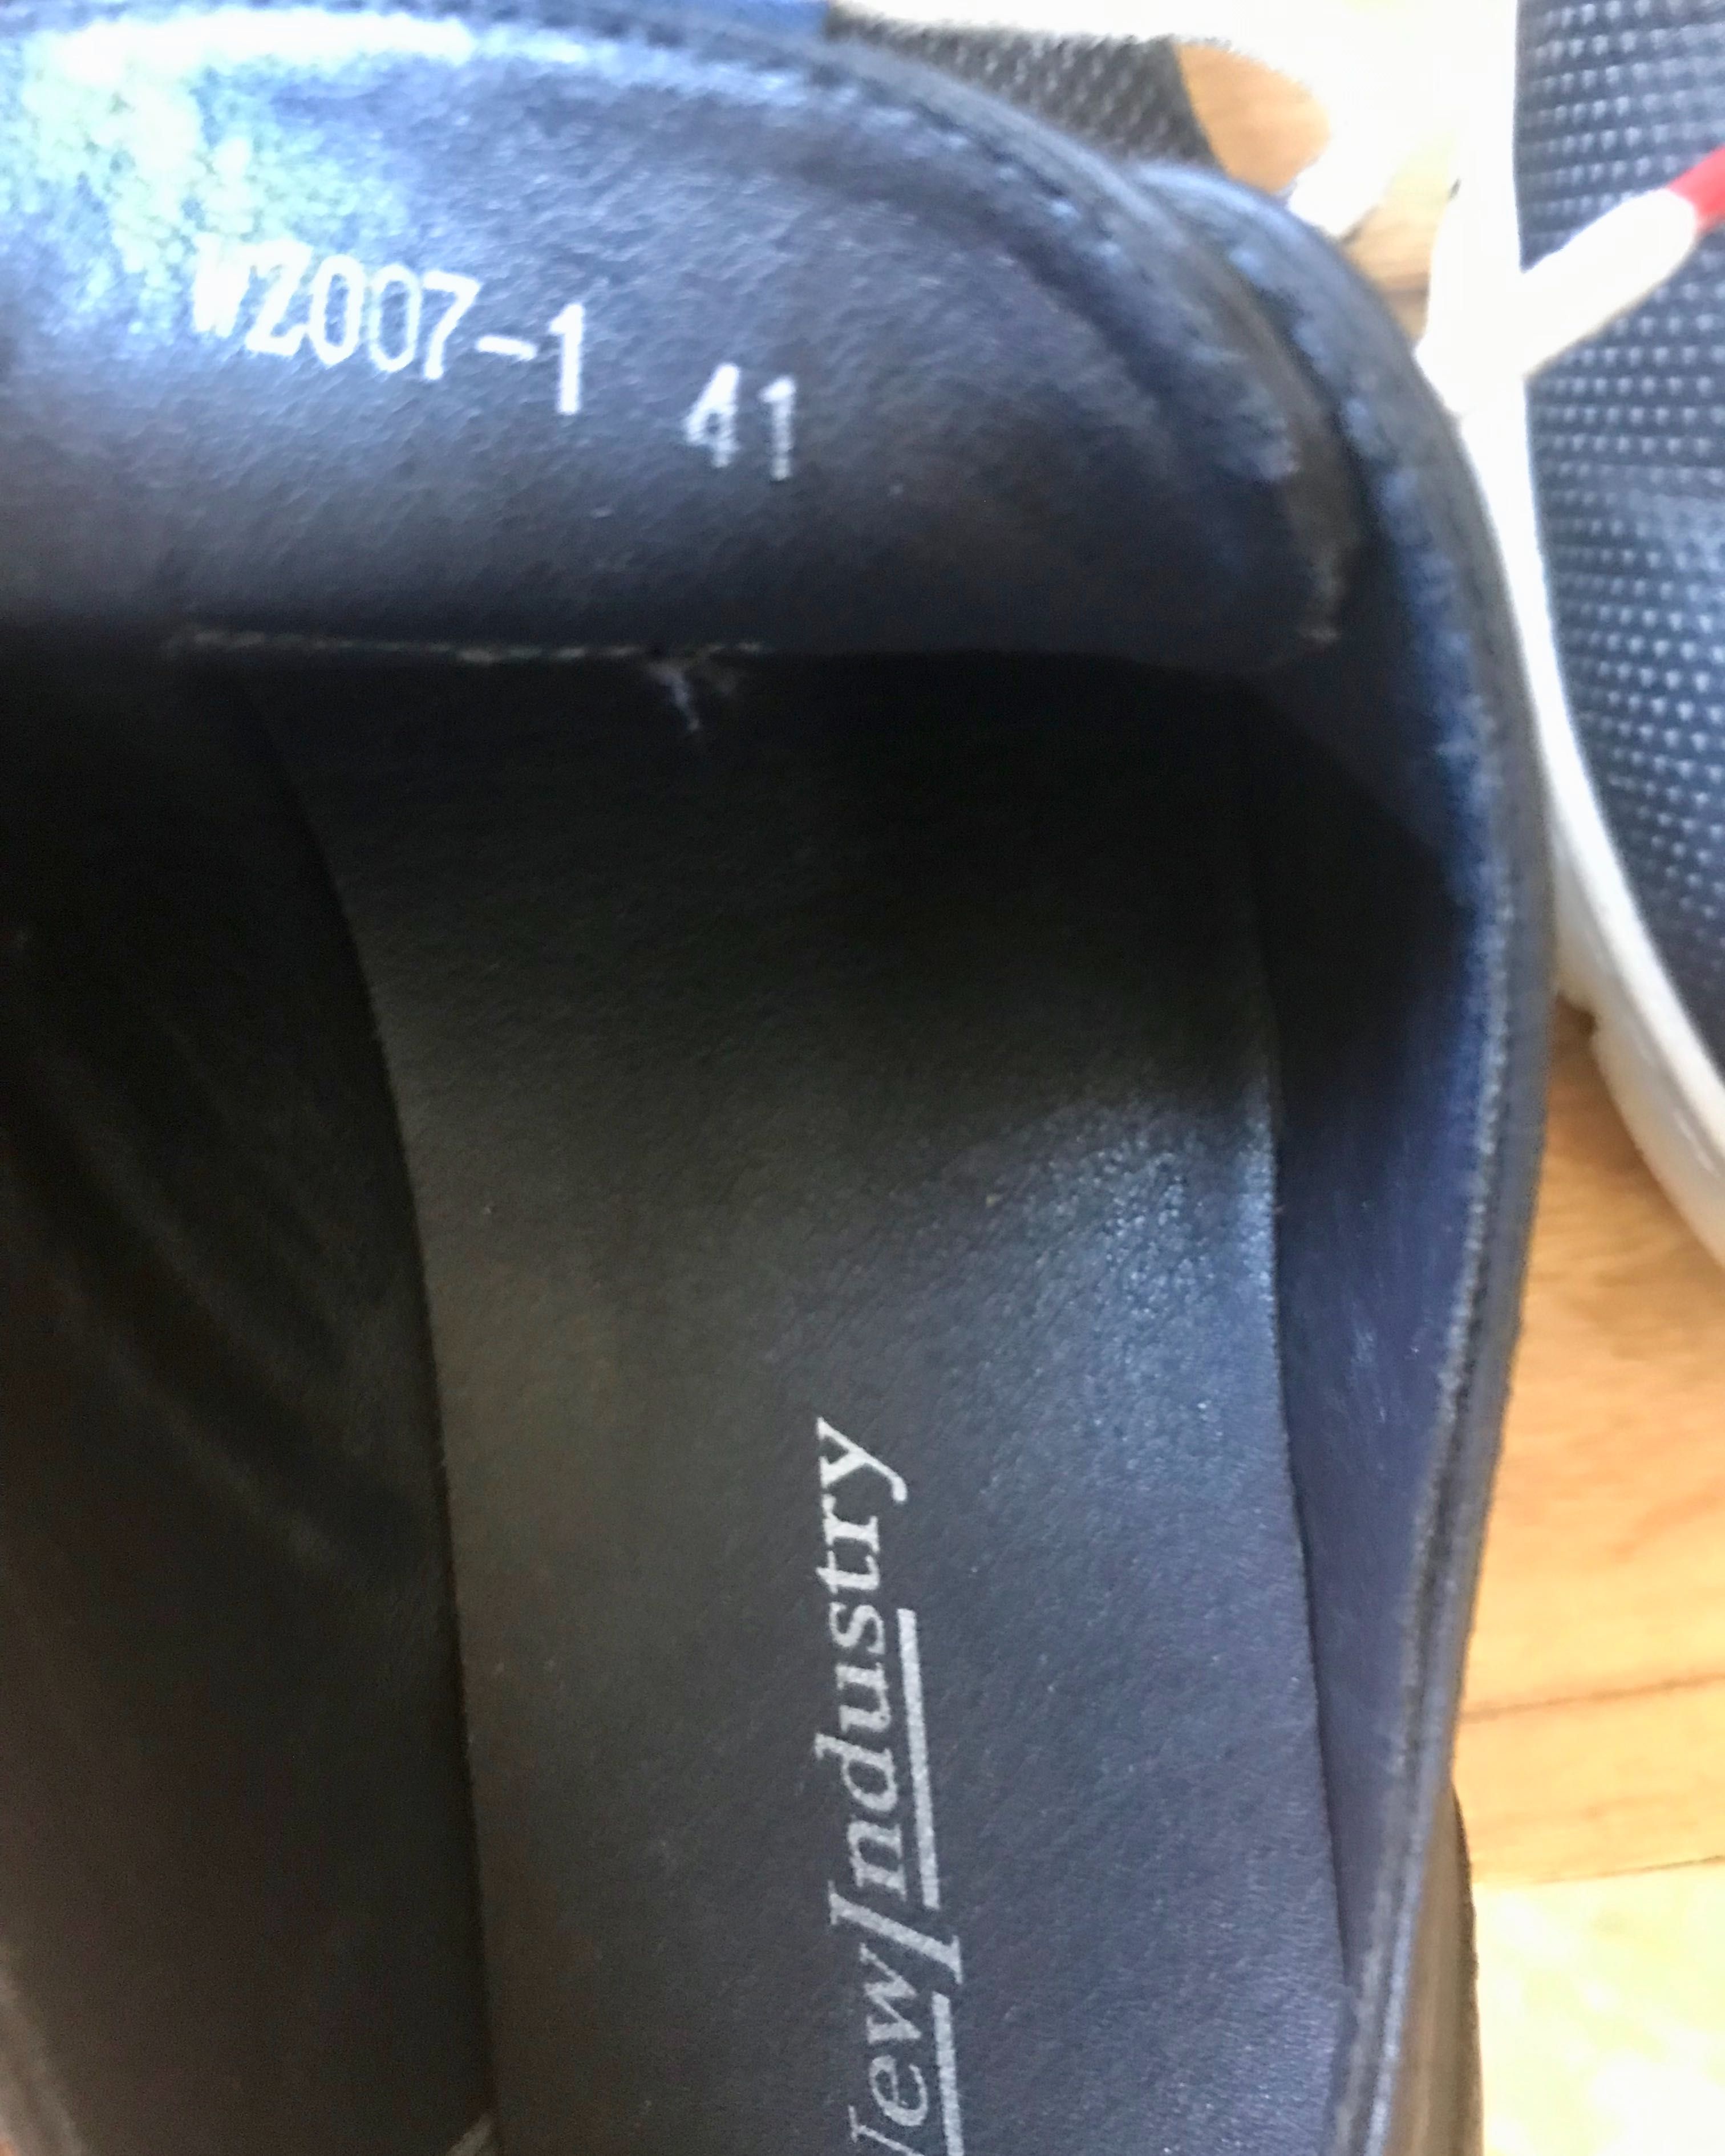 Туфли мужские размер 41, фирма New Industry